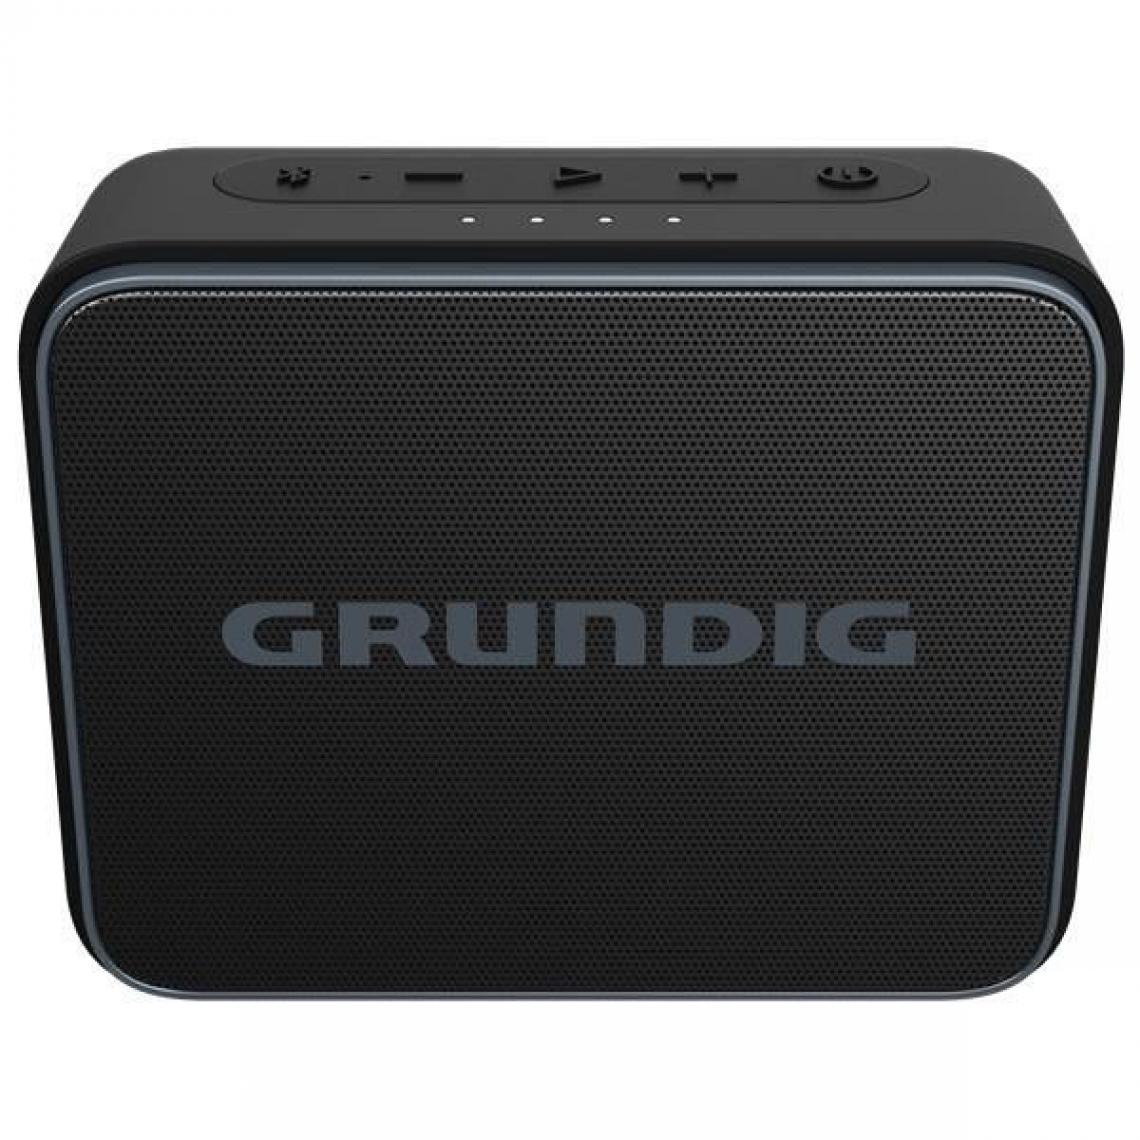 Grundig - Enceinte portable Bluetooth Waterproof IPX7 - 3,5WRMS - Mains libres - GRUNDIG - JAMBLACK - Enceintes Hifi